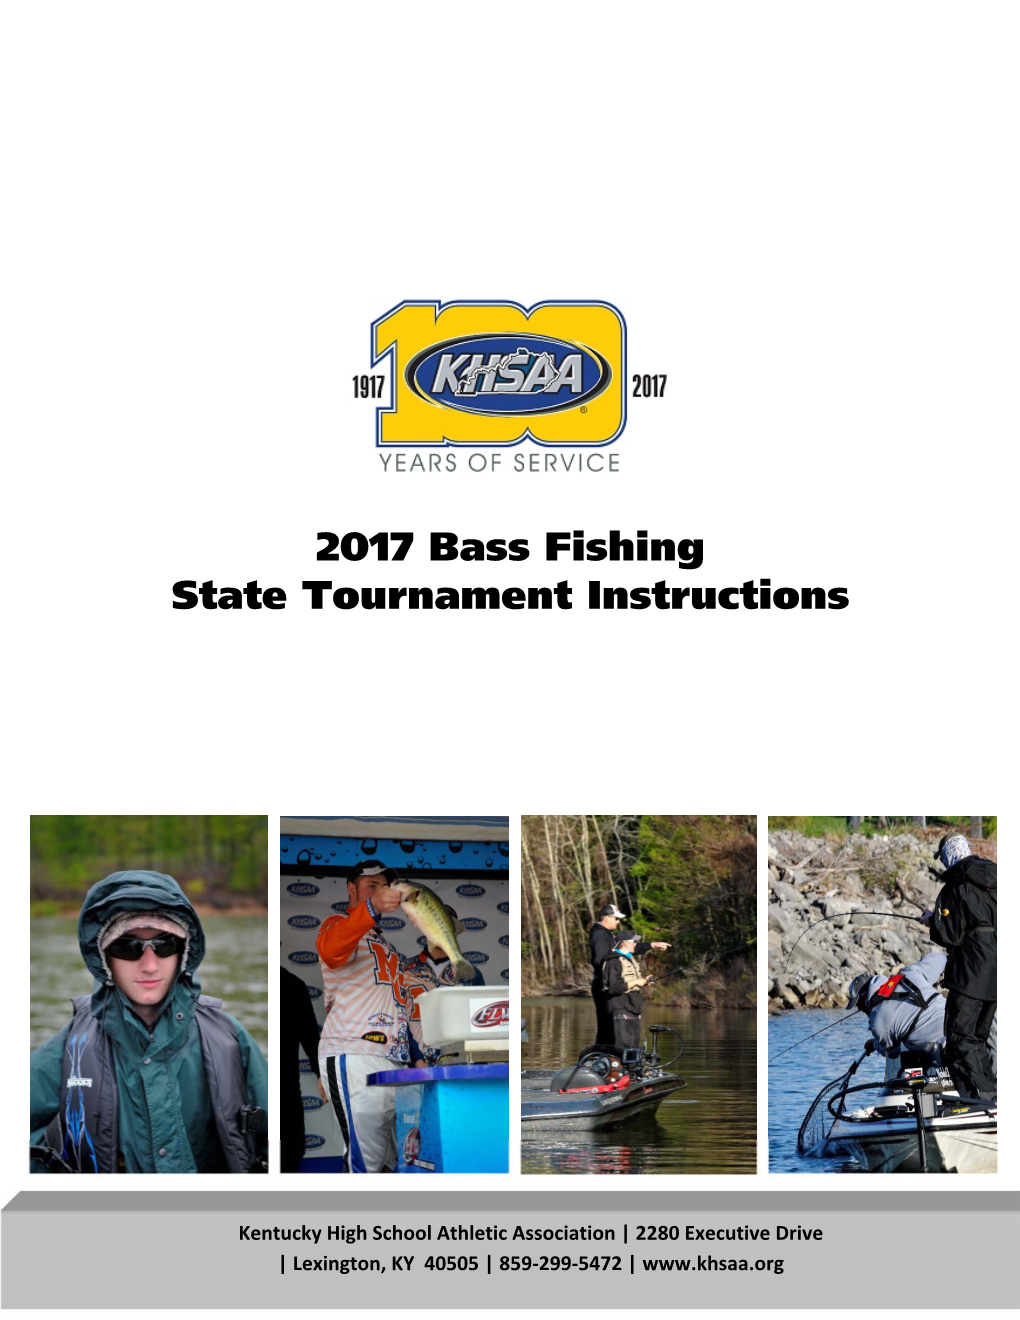 2017 Bass Fishing State Tournament Instructions